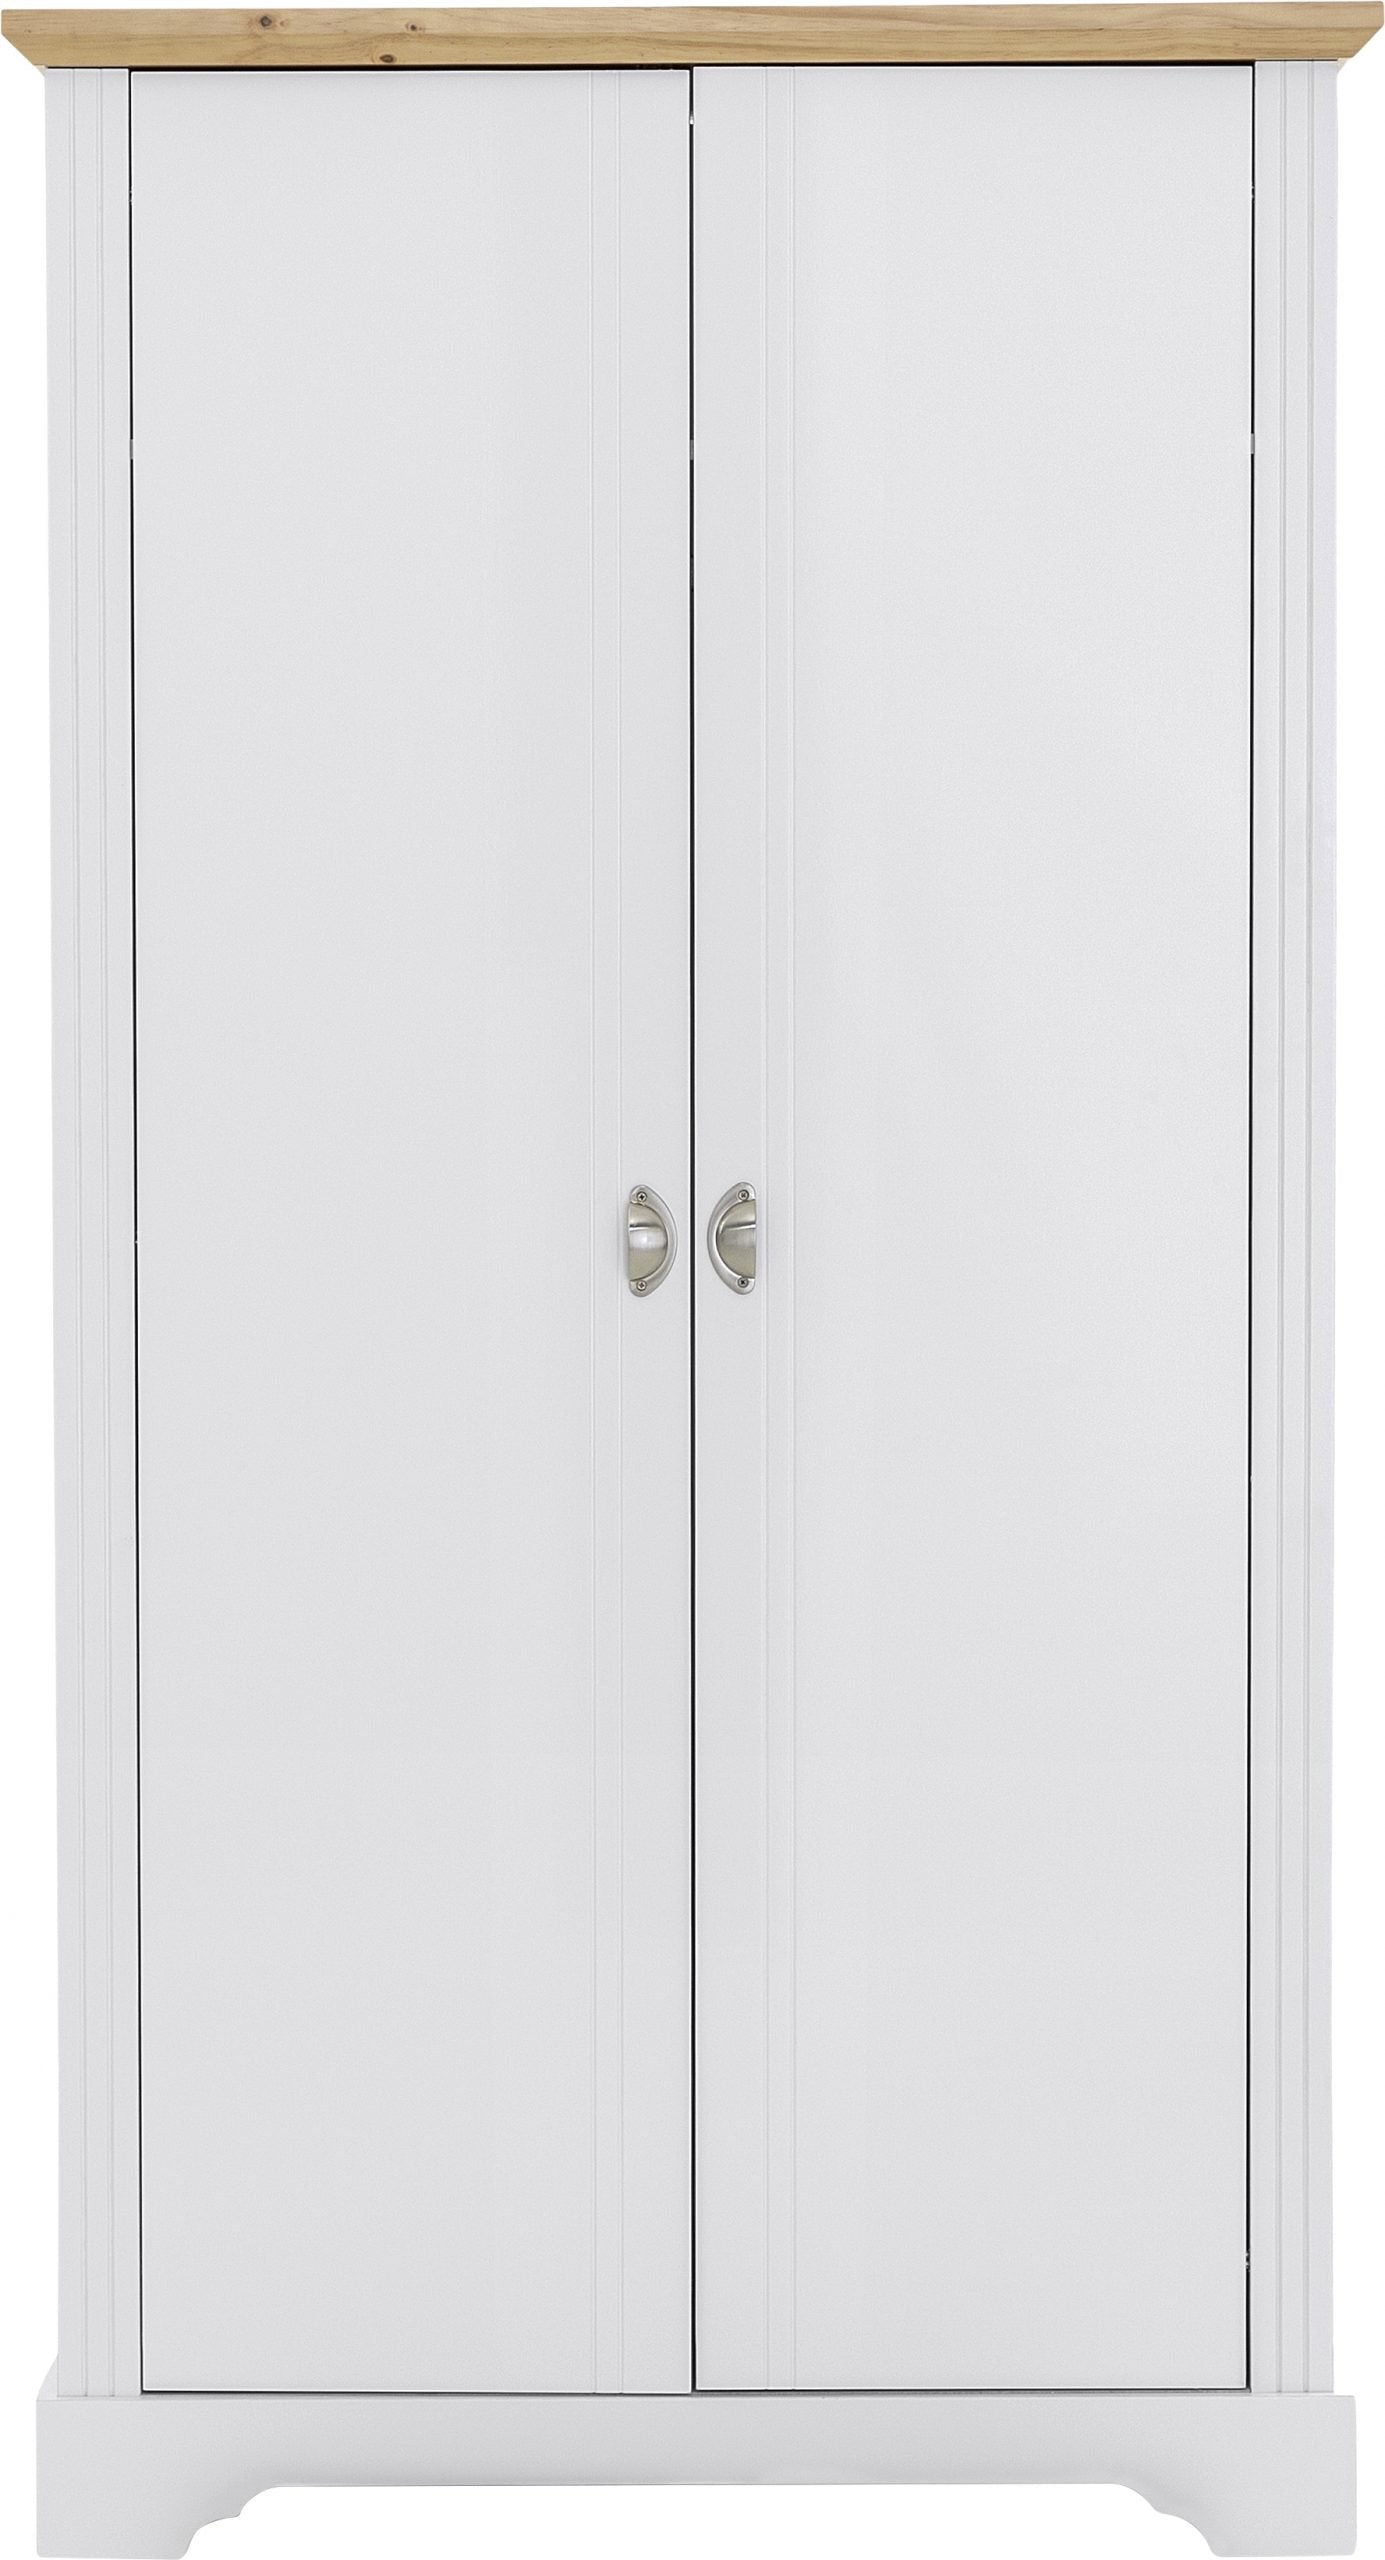 2 door wardrobe white